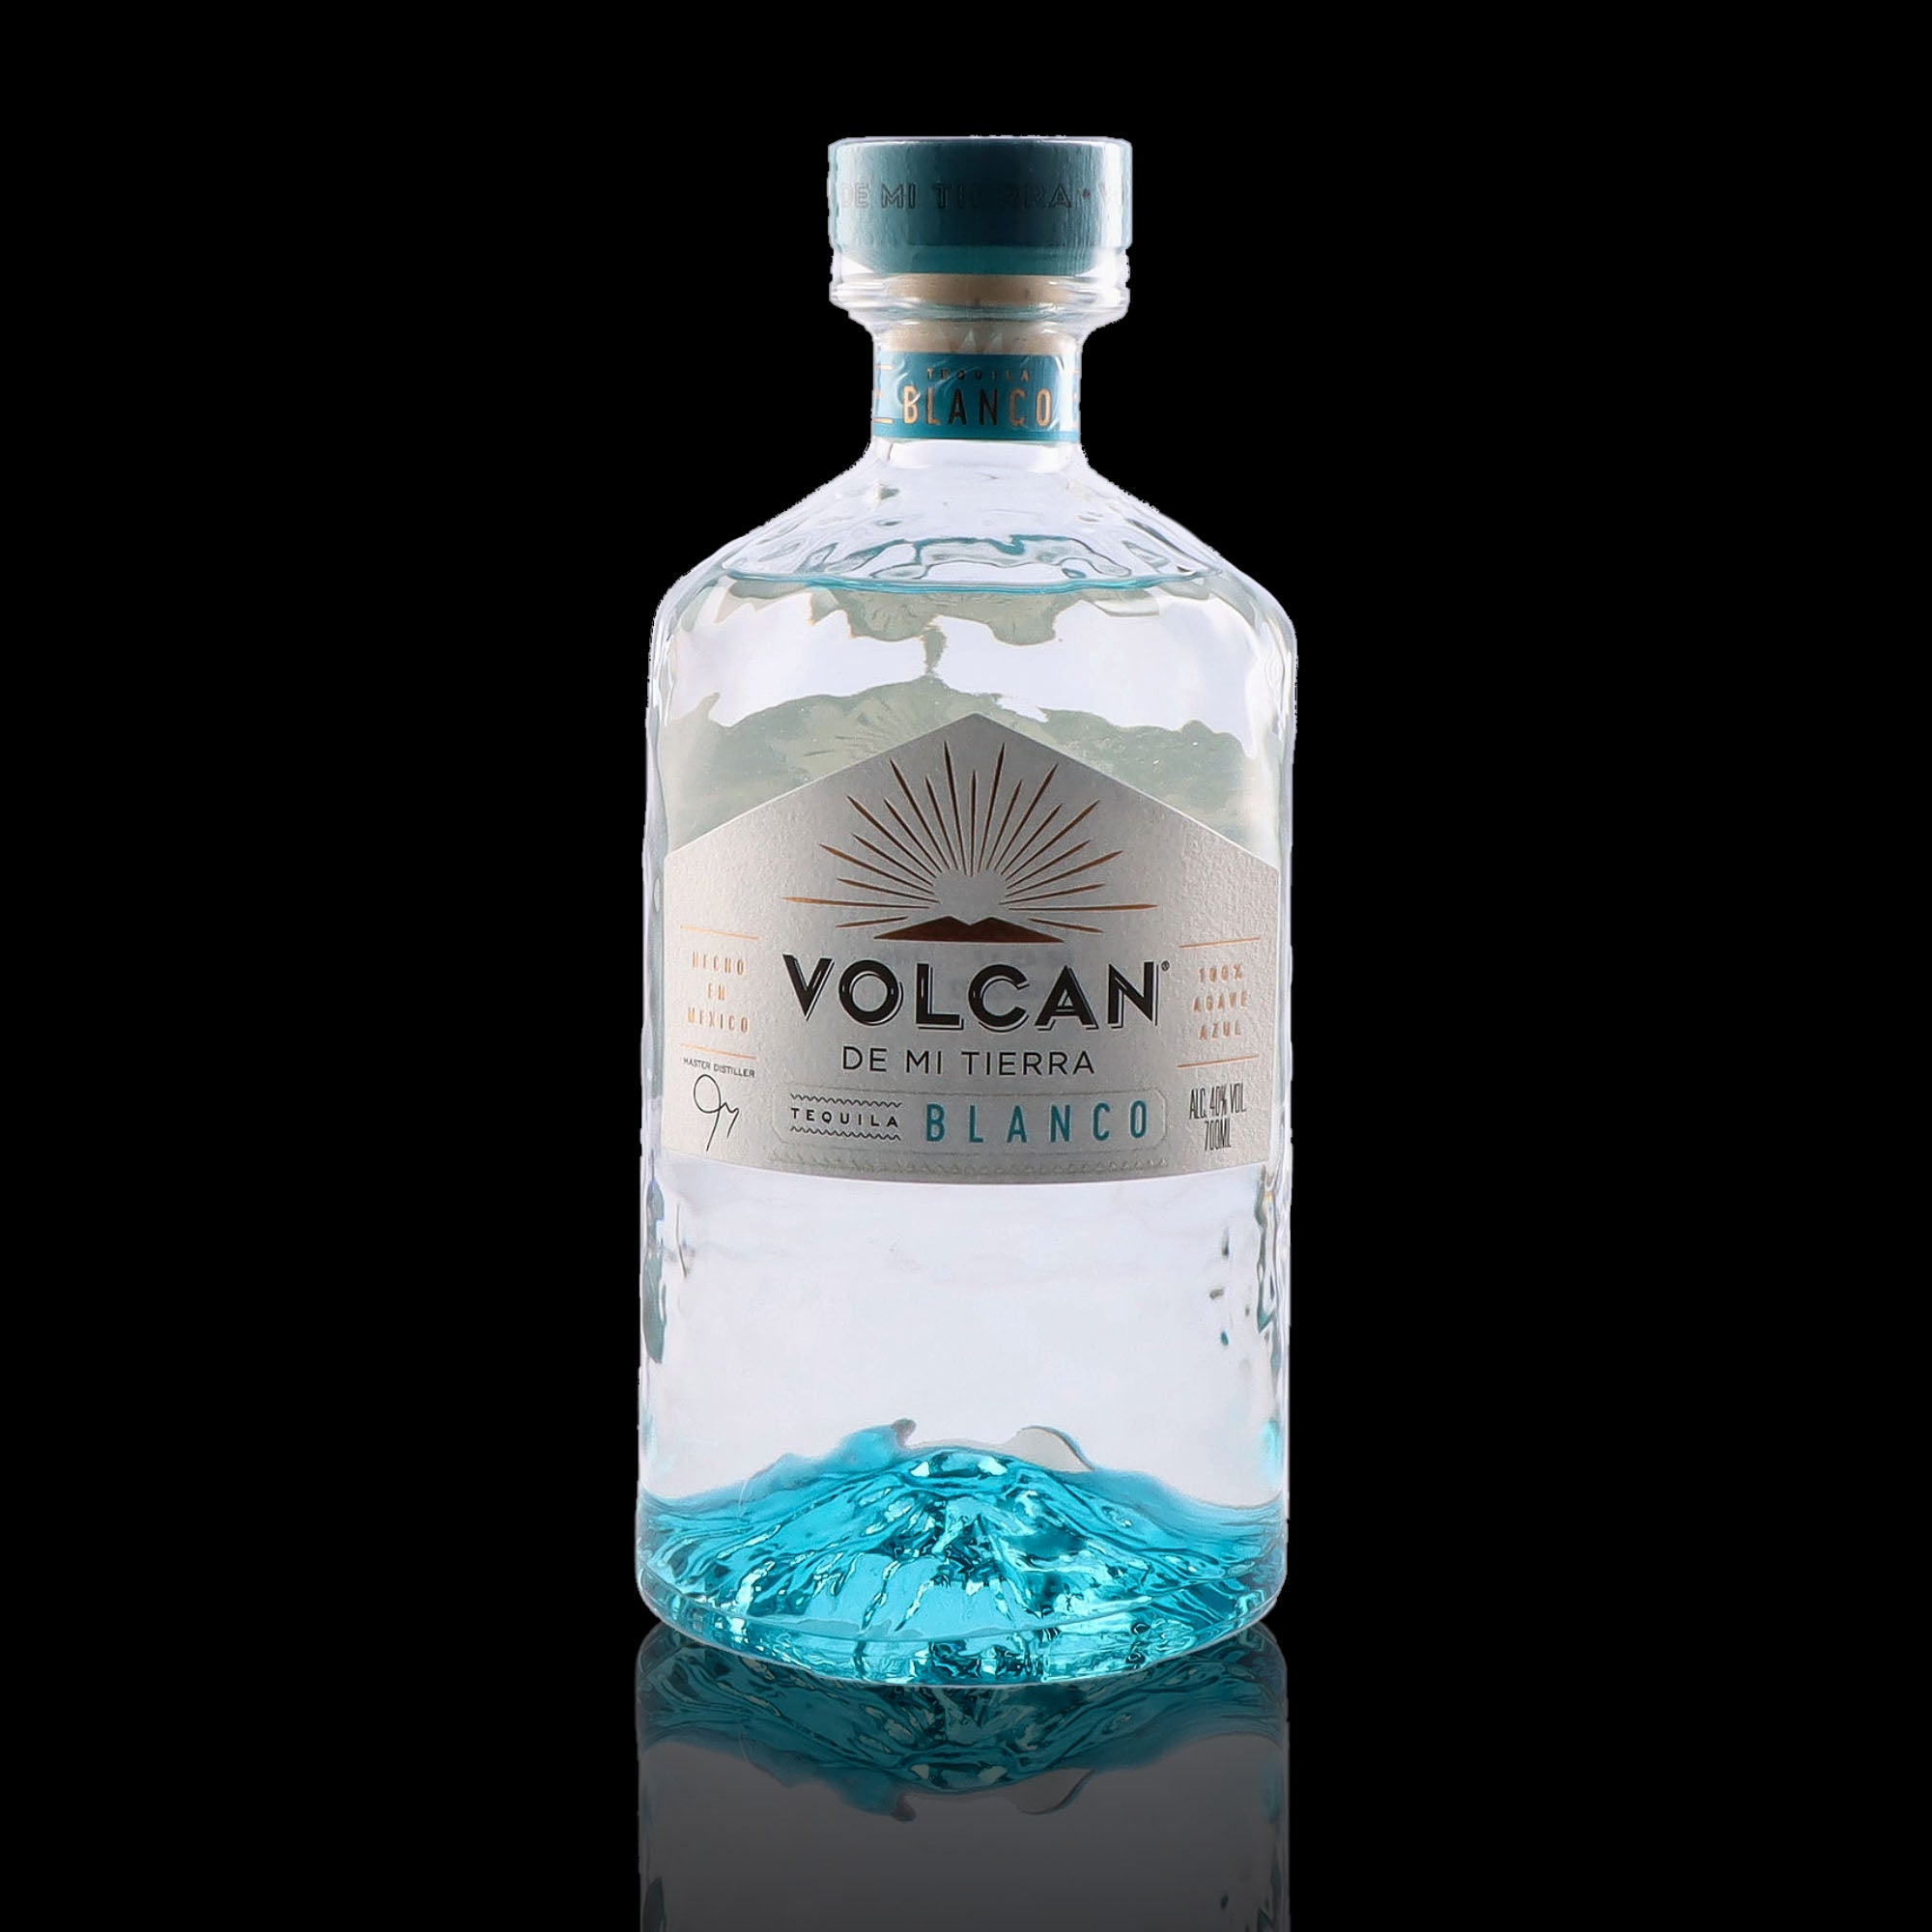 Une bouteille de Tequila, de la marque Volcan de mi tierra, nommée Blanco.